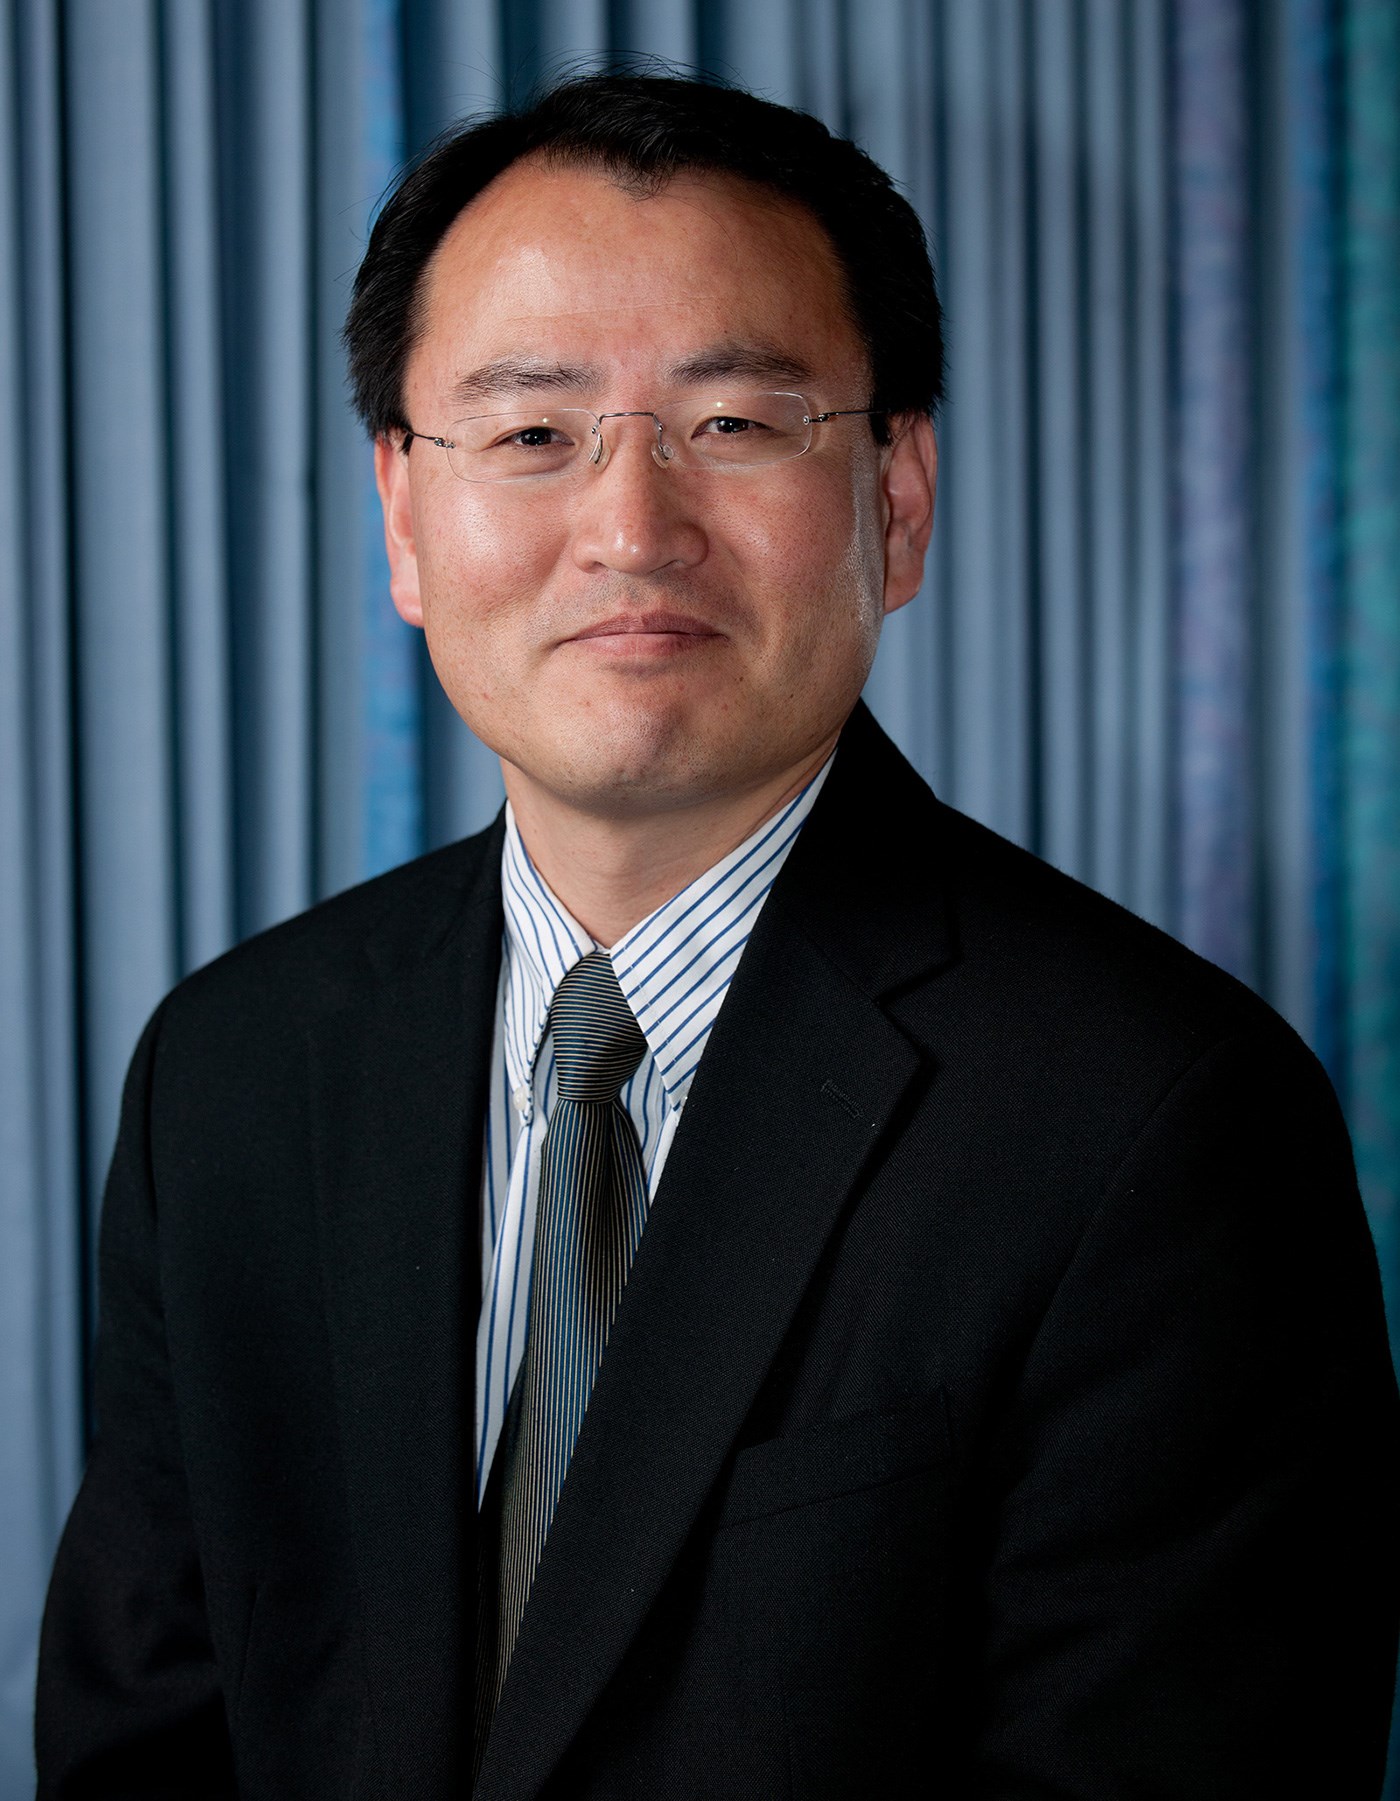 Seongkyu Yoon  is a Professor in the Francis College of Engineering, Chemical Engineering Department.